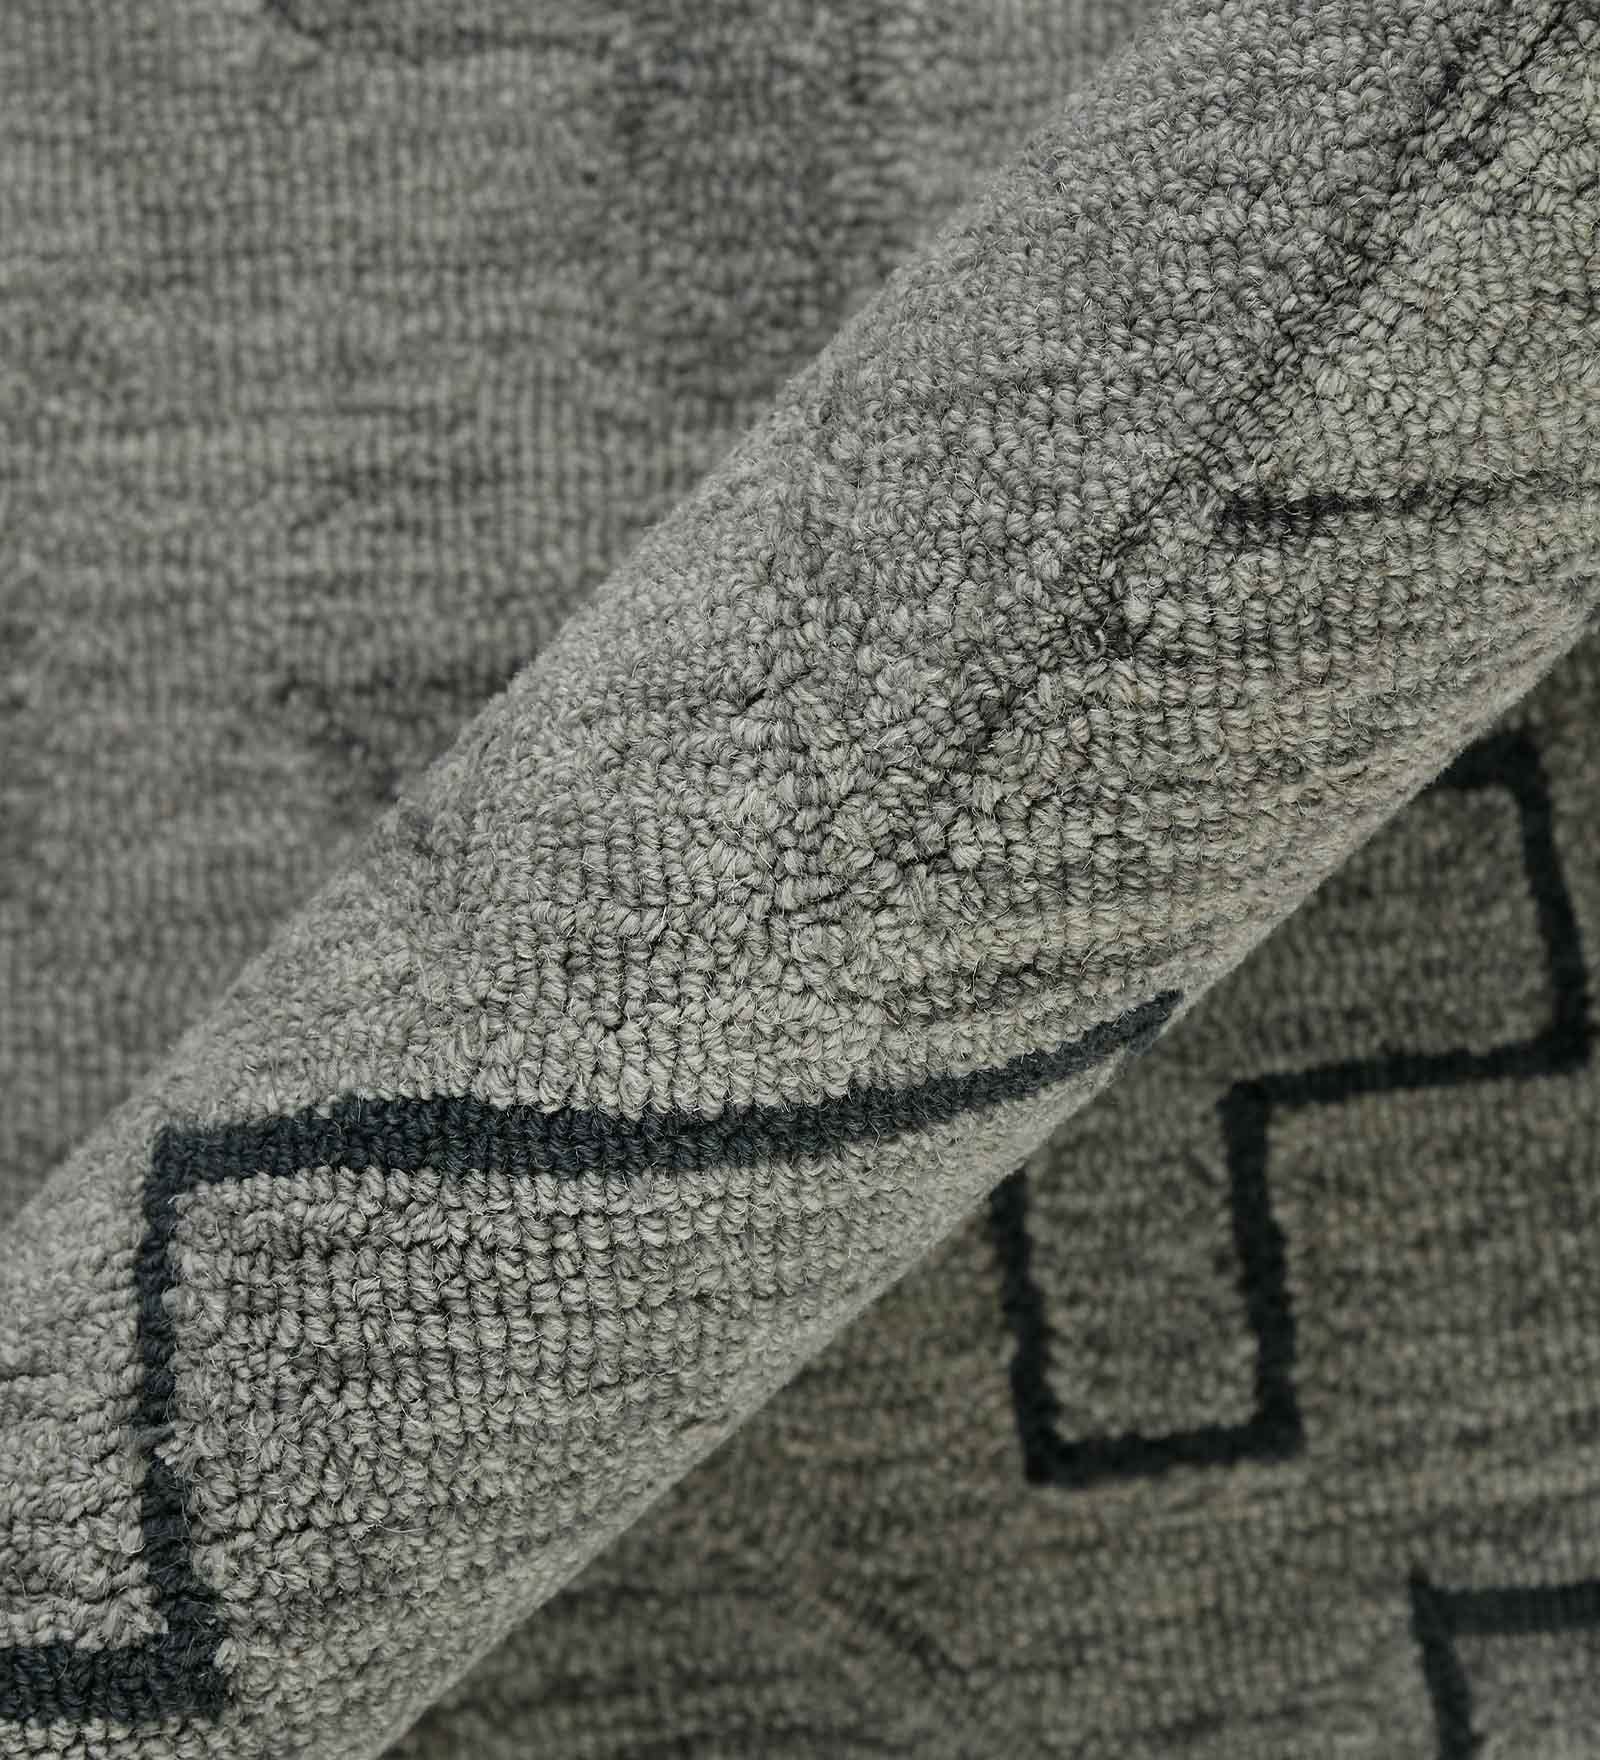 SHALE GRAY Wool Asteria 4x6 Feet  Hand-Tufted Carpet - Rug